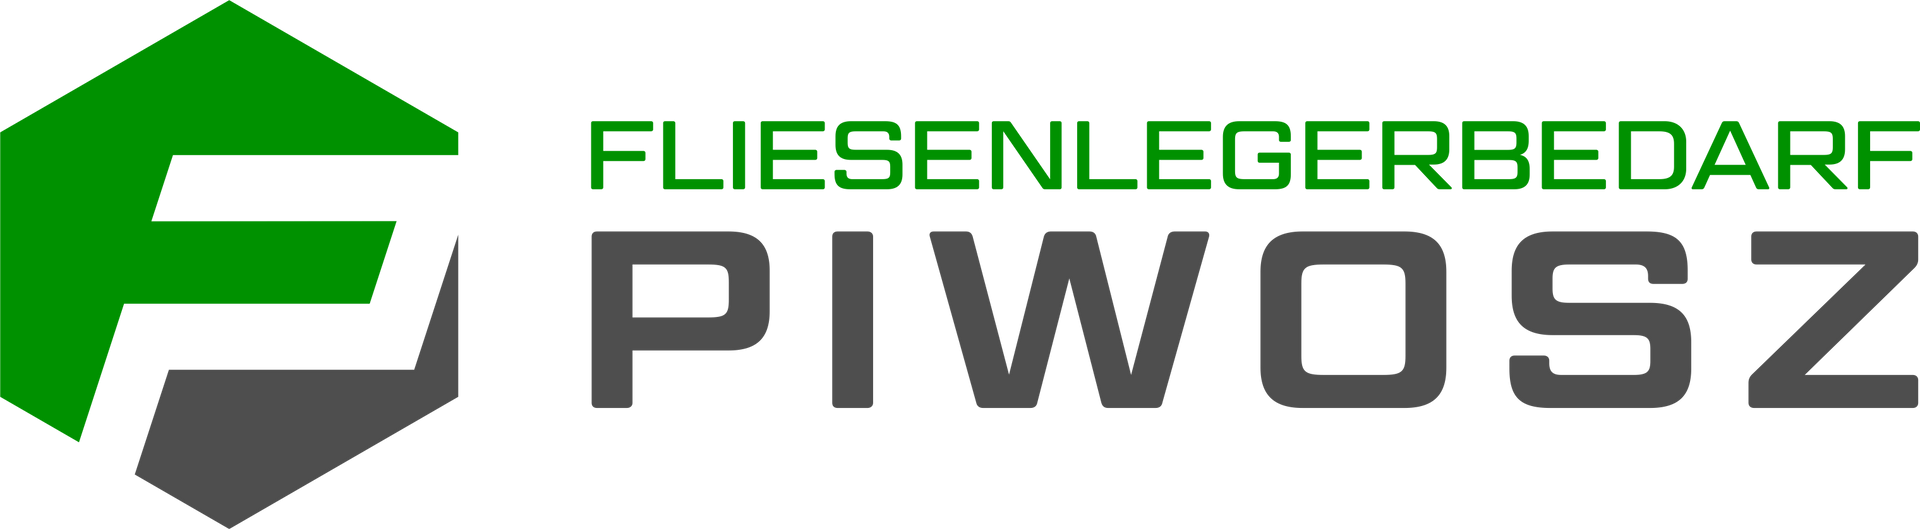 Fliesenlegerbedarf Piwosz in Oberhausen Logo 01